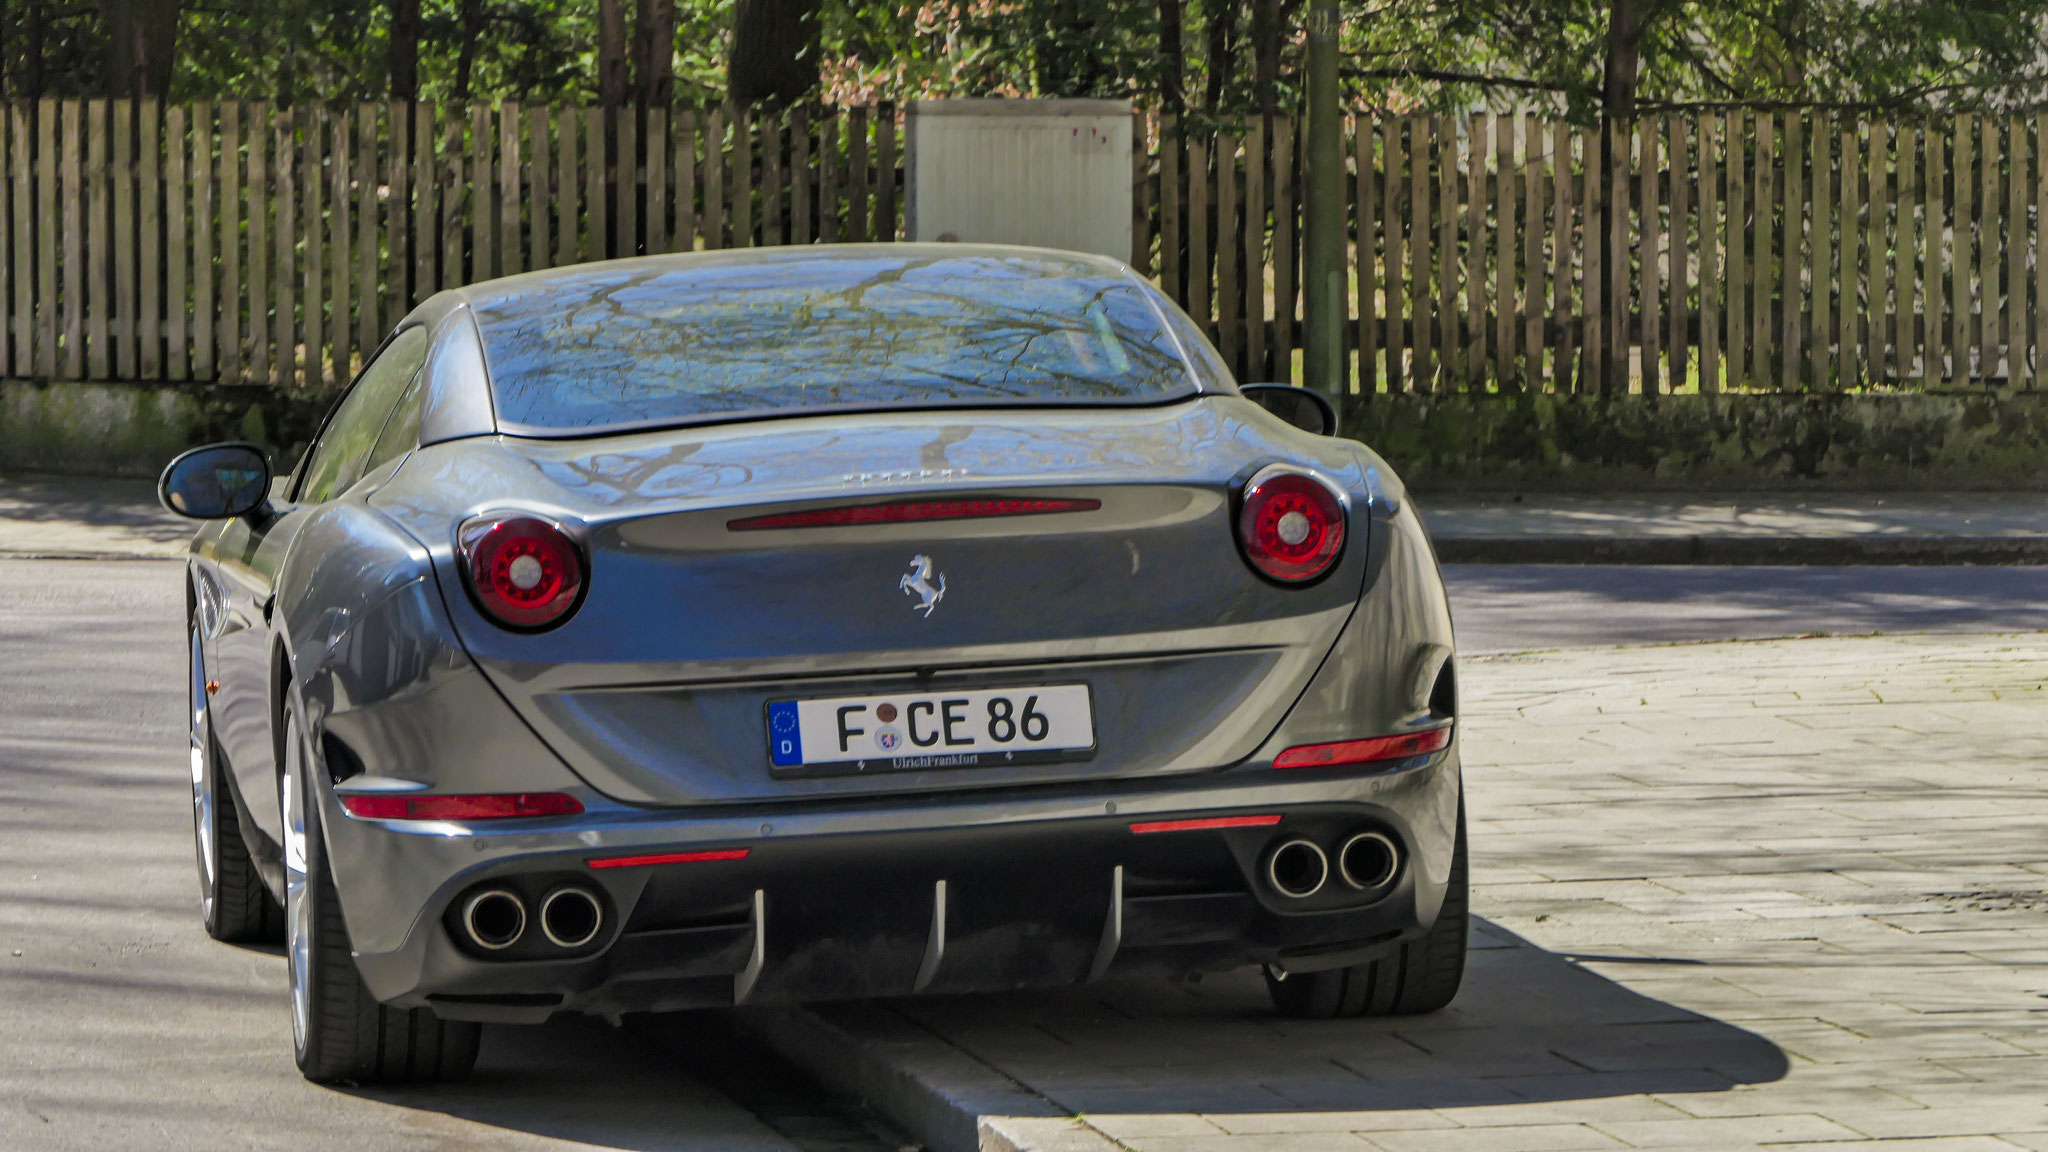 Ferrari California T - F-CE-86